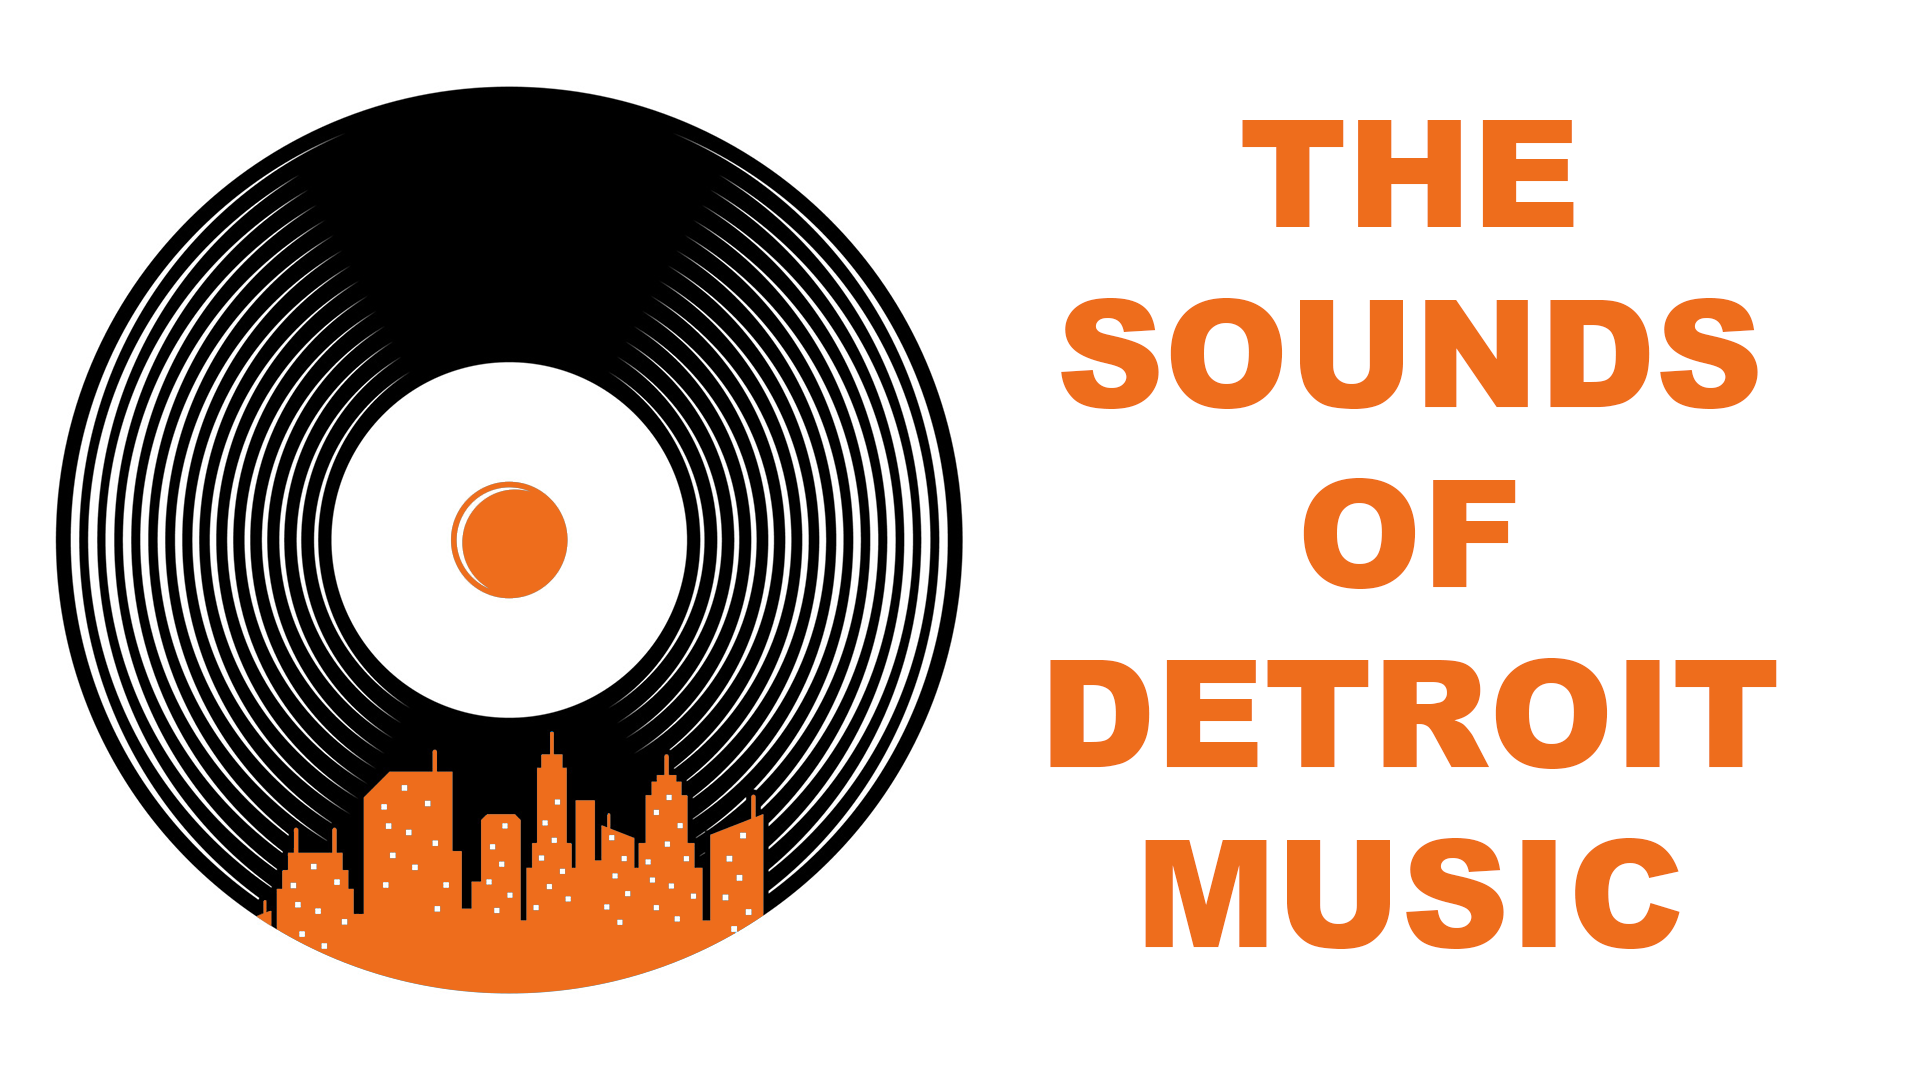 One Detroit music